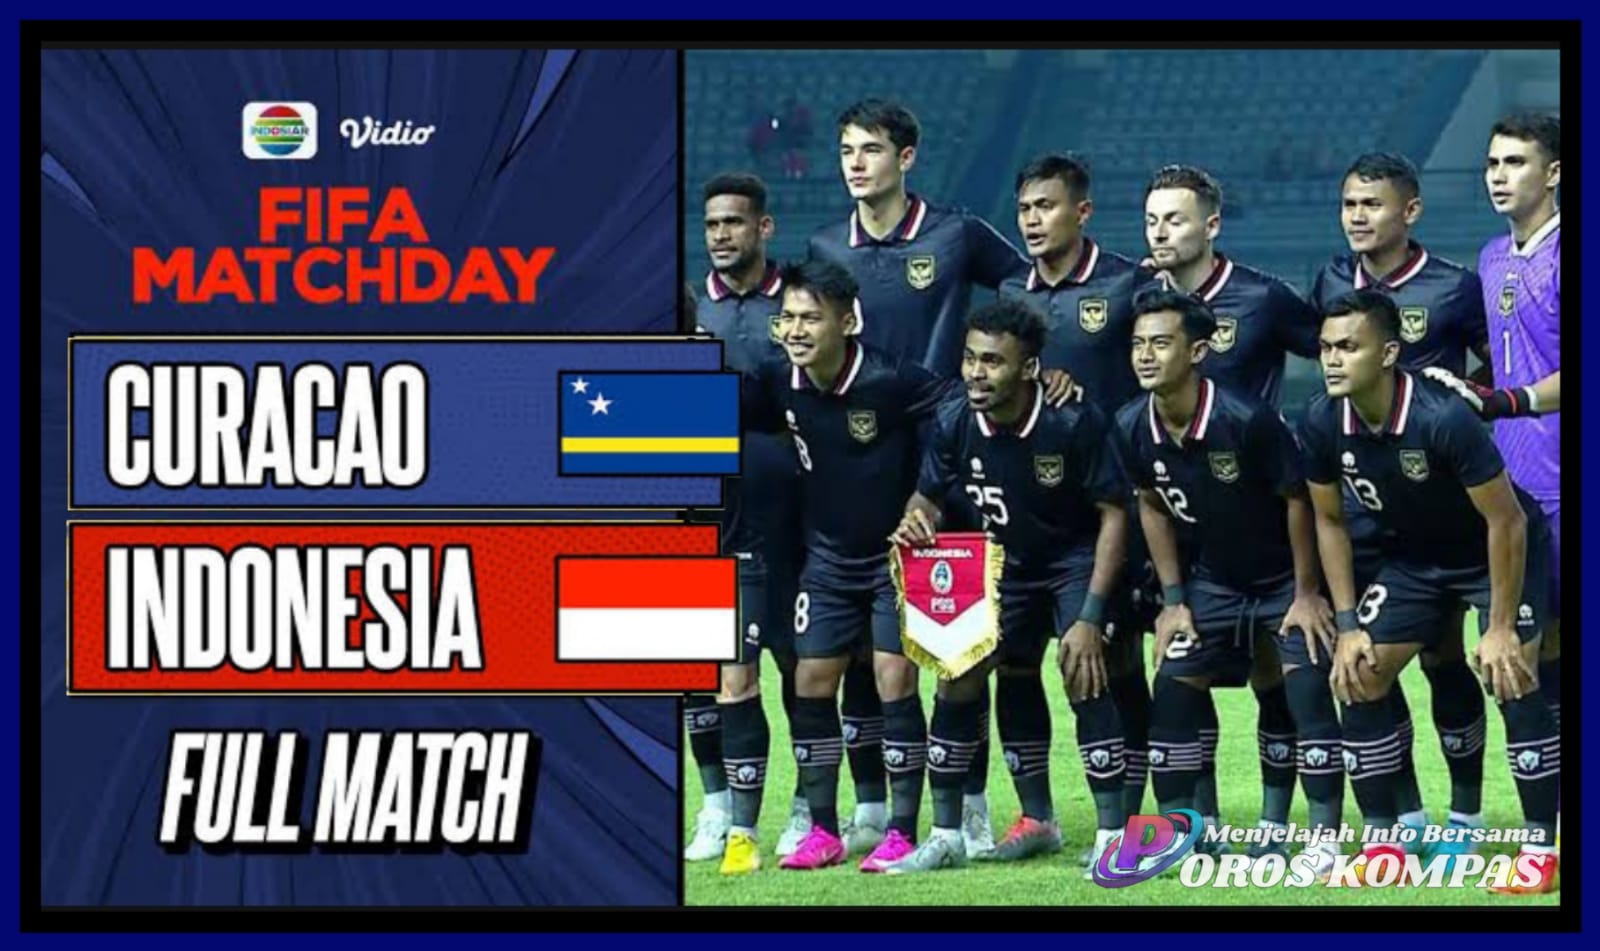 Live Streaming Curacao vs Indonesia di Vidio Premium : Jadwal FIFA Matchday 2022